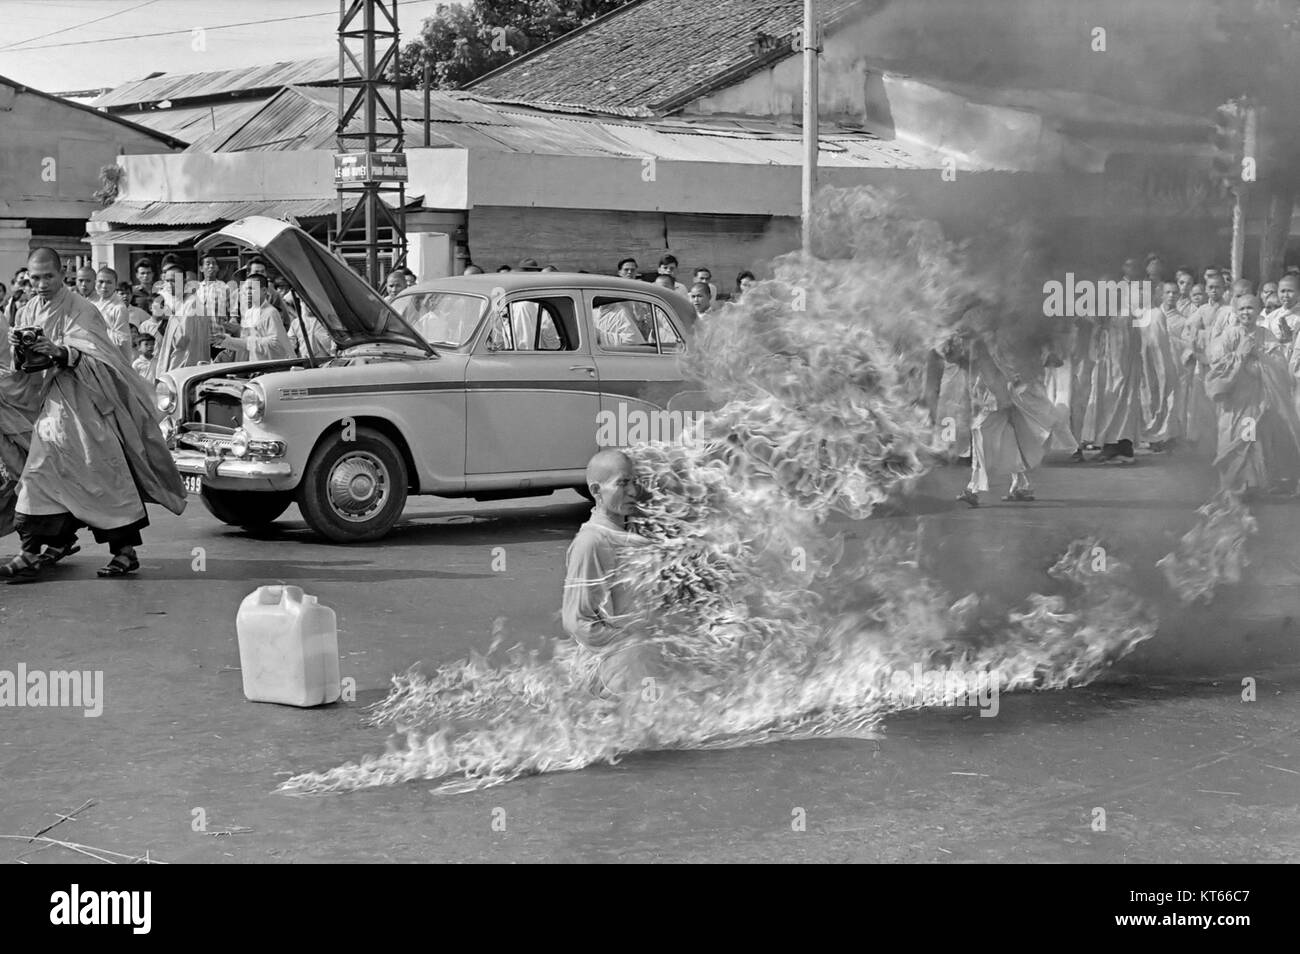 ThC3ADch QuE1BAA3ng C490E1BBA9c self-immolation denoised Stock Photo